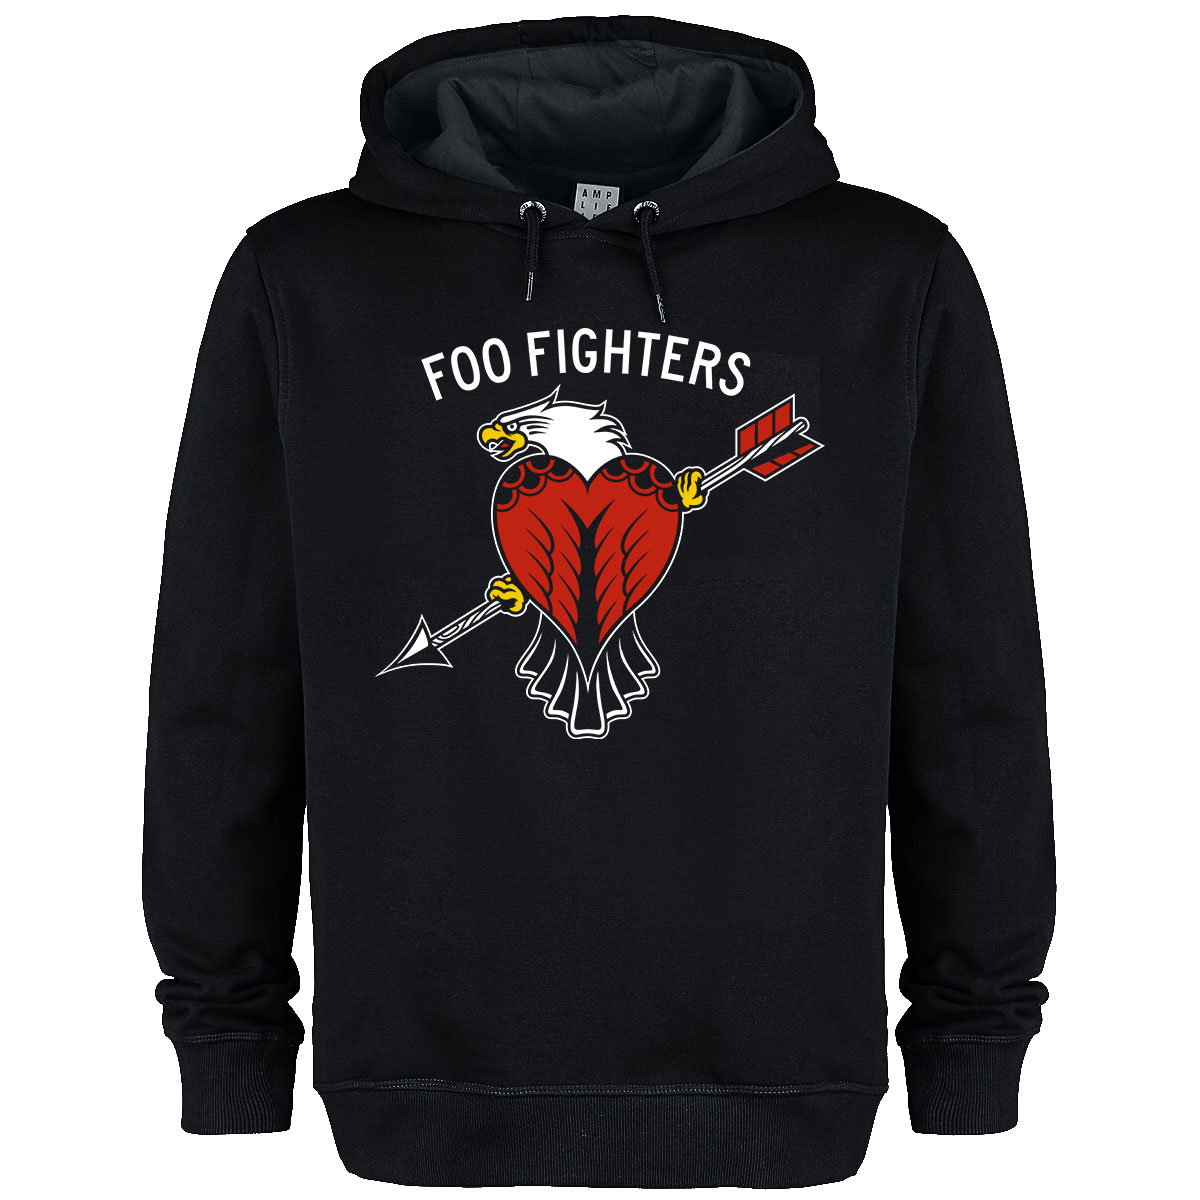 Foo Fighters Eagle Tattoo